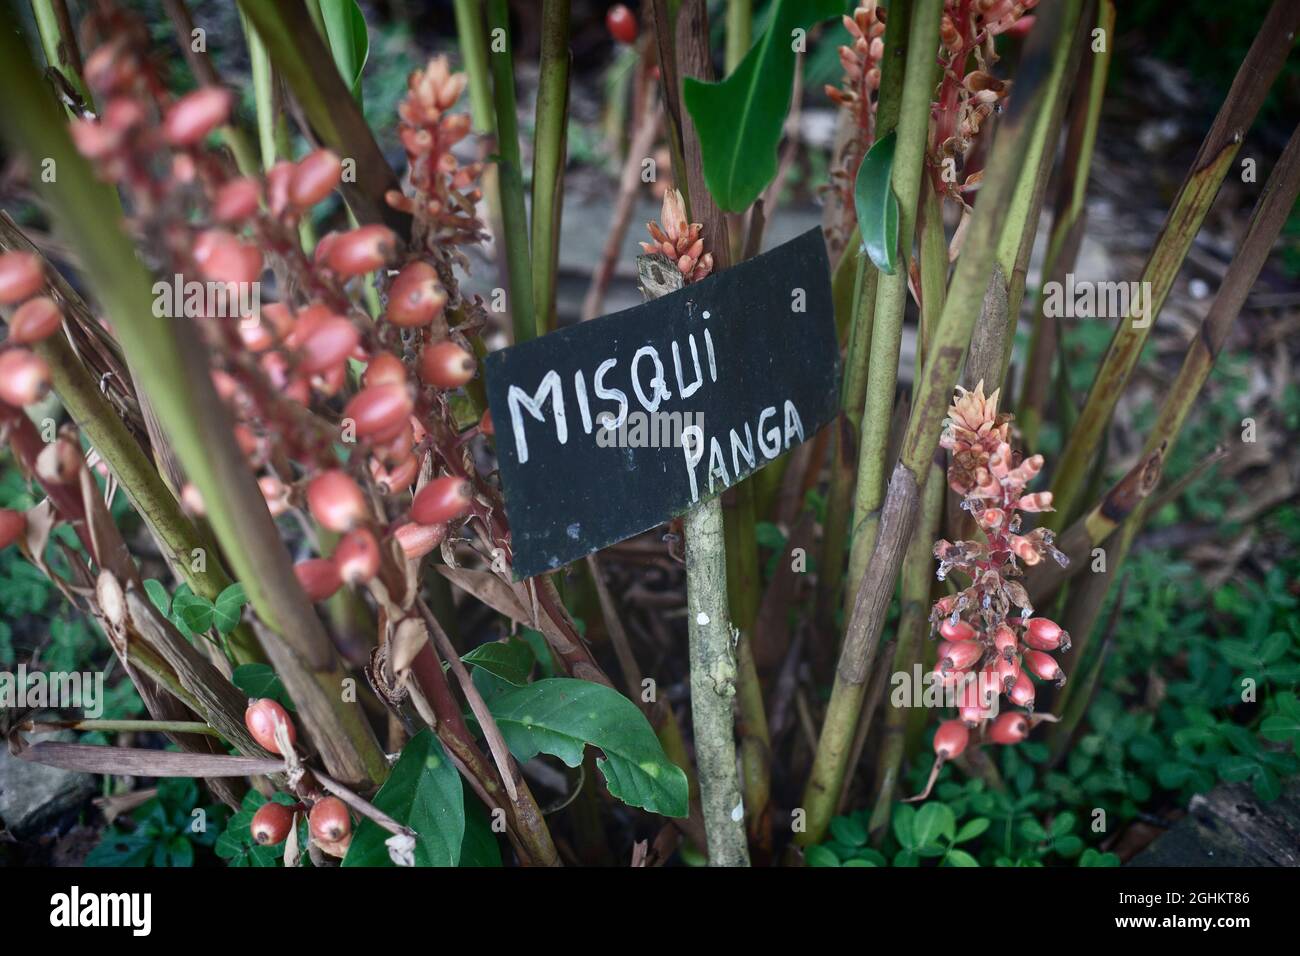 Renealmia alpinia misqui panga or michiquipanga, medicinal plant from peruvian rainforest. Stock Photo